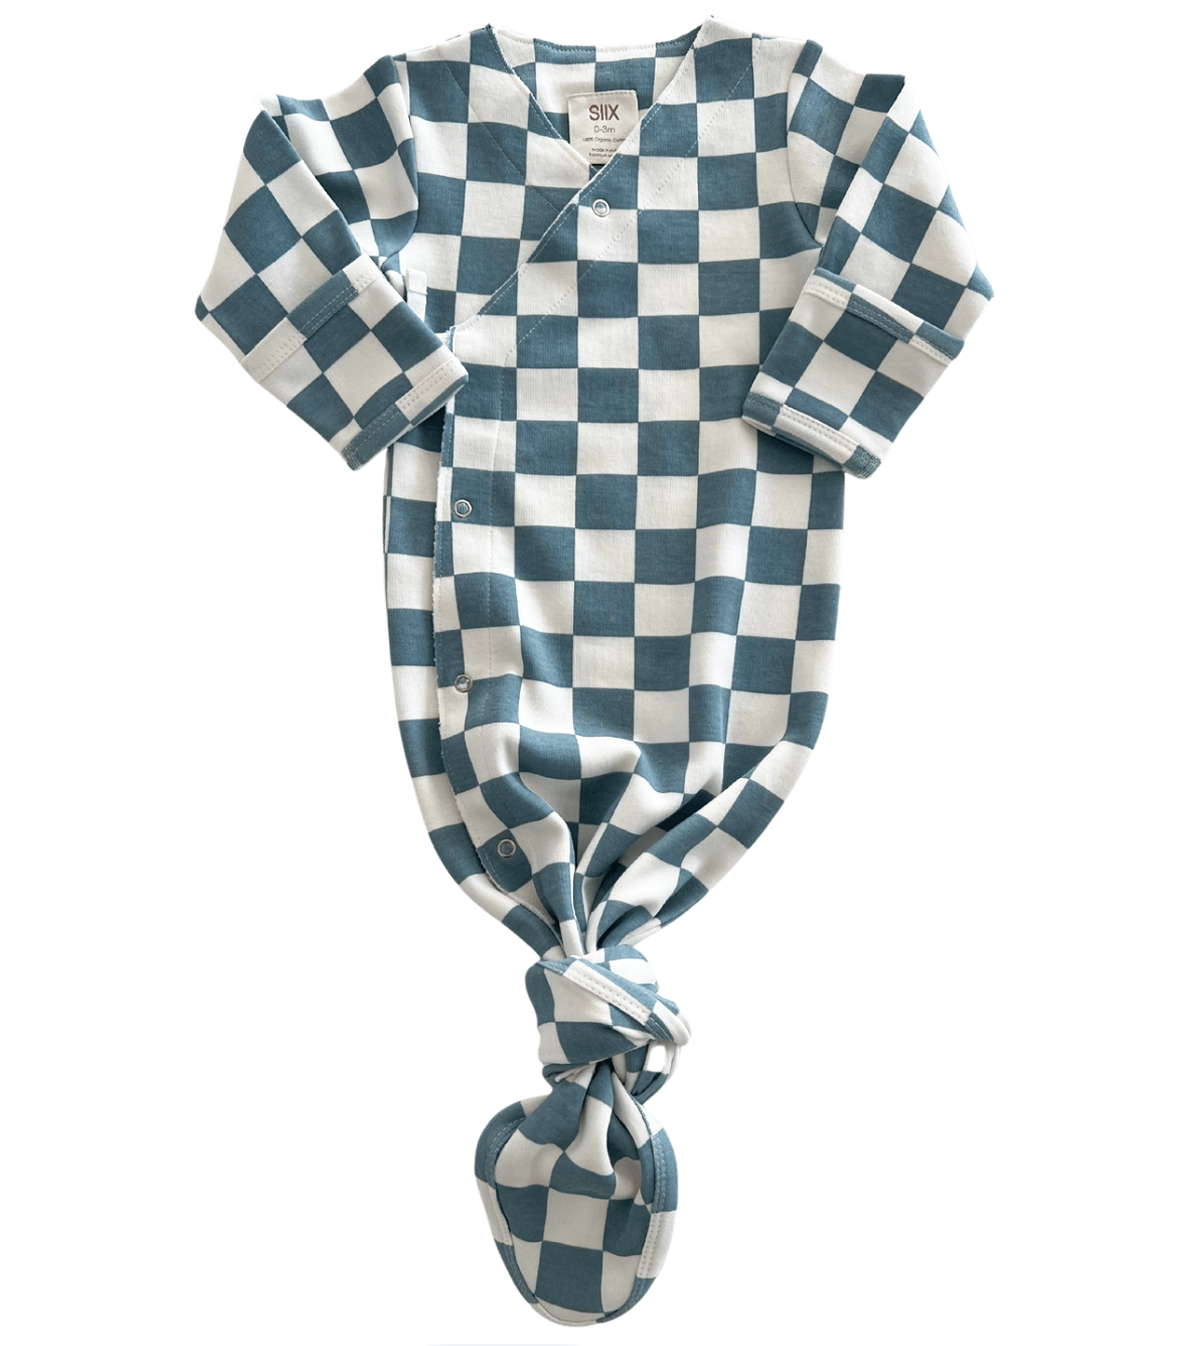 Blueberry Muffin Checkerboard / Organic Kimono Knot Gown